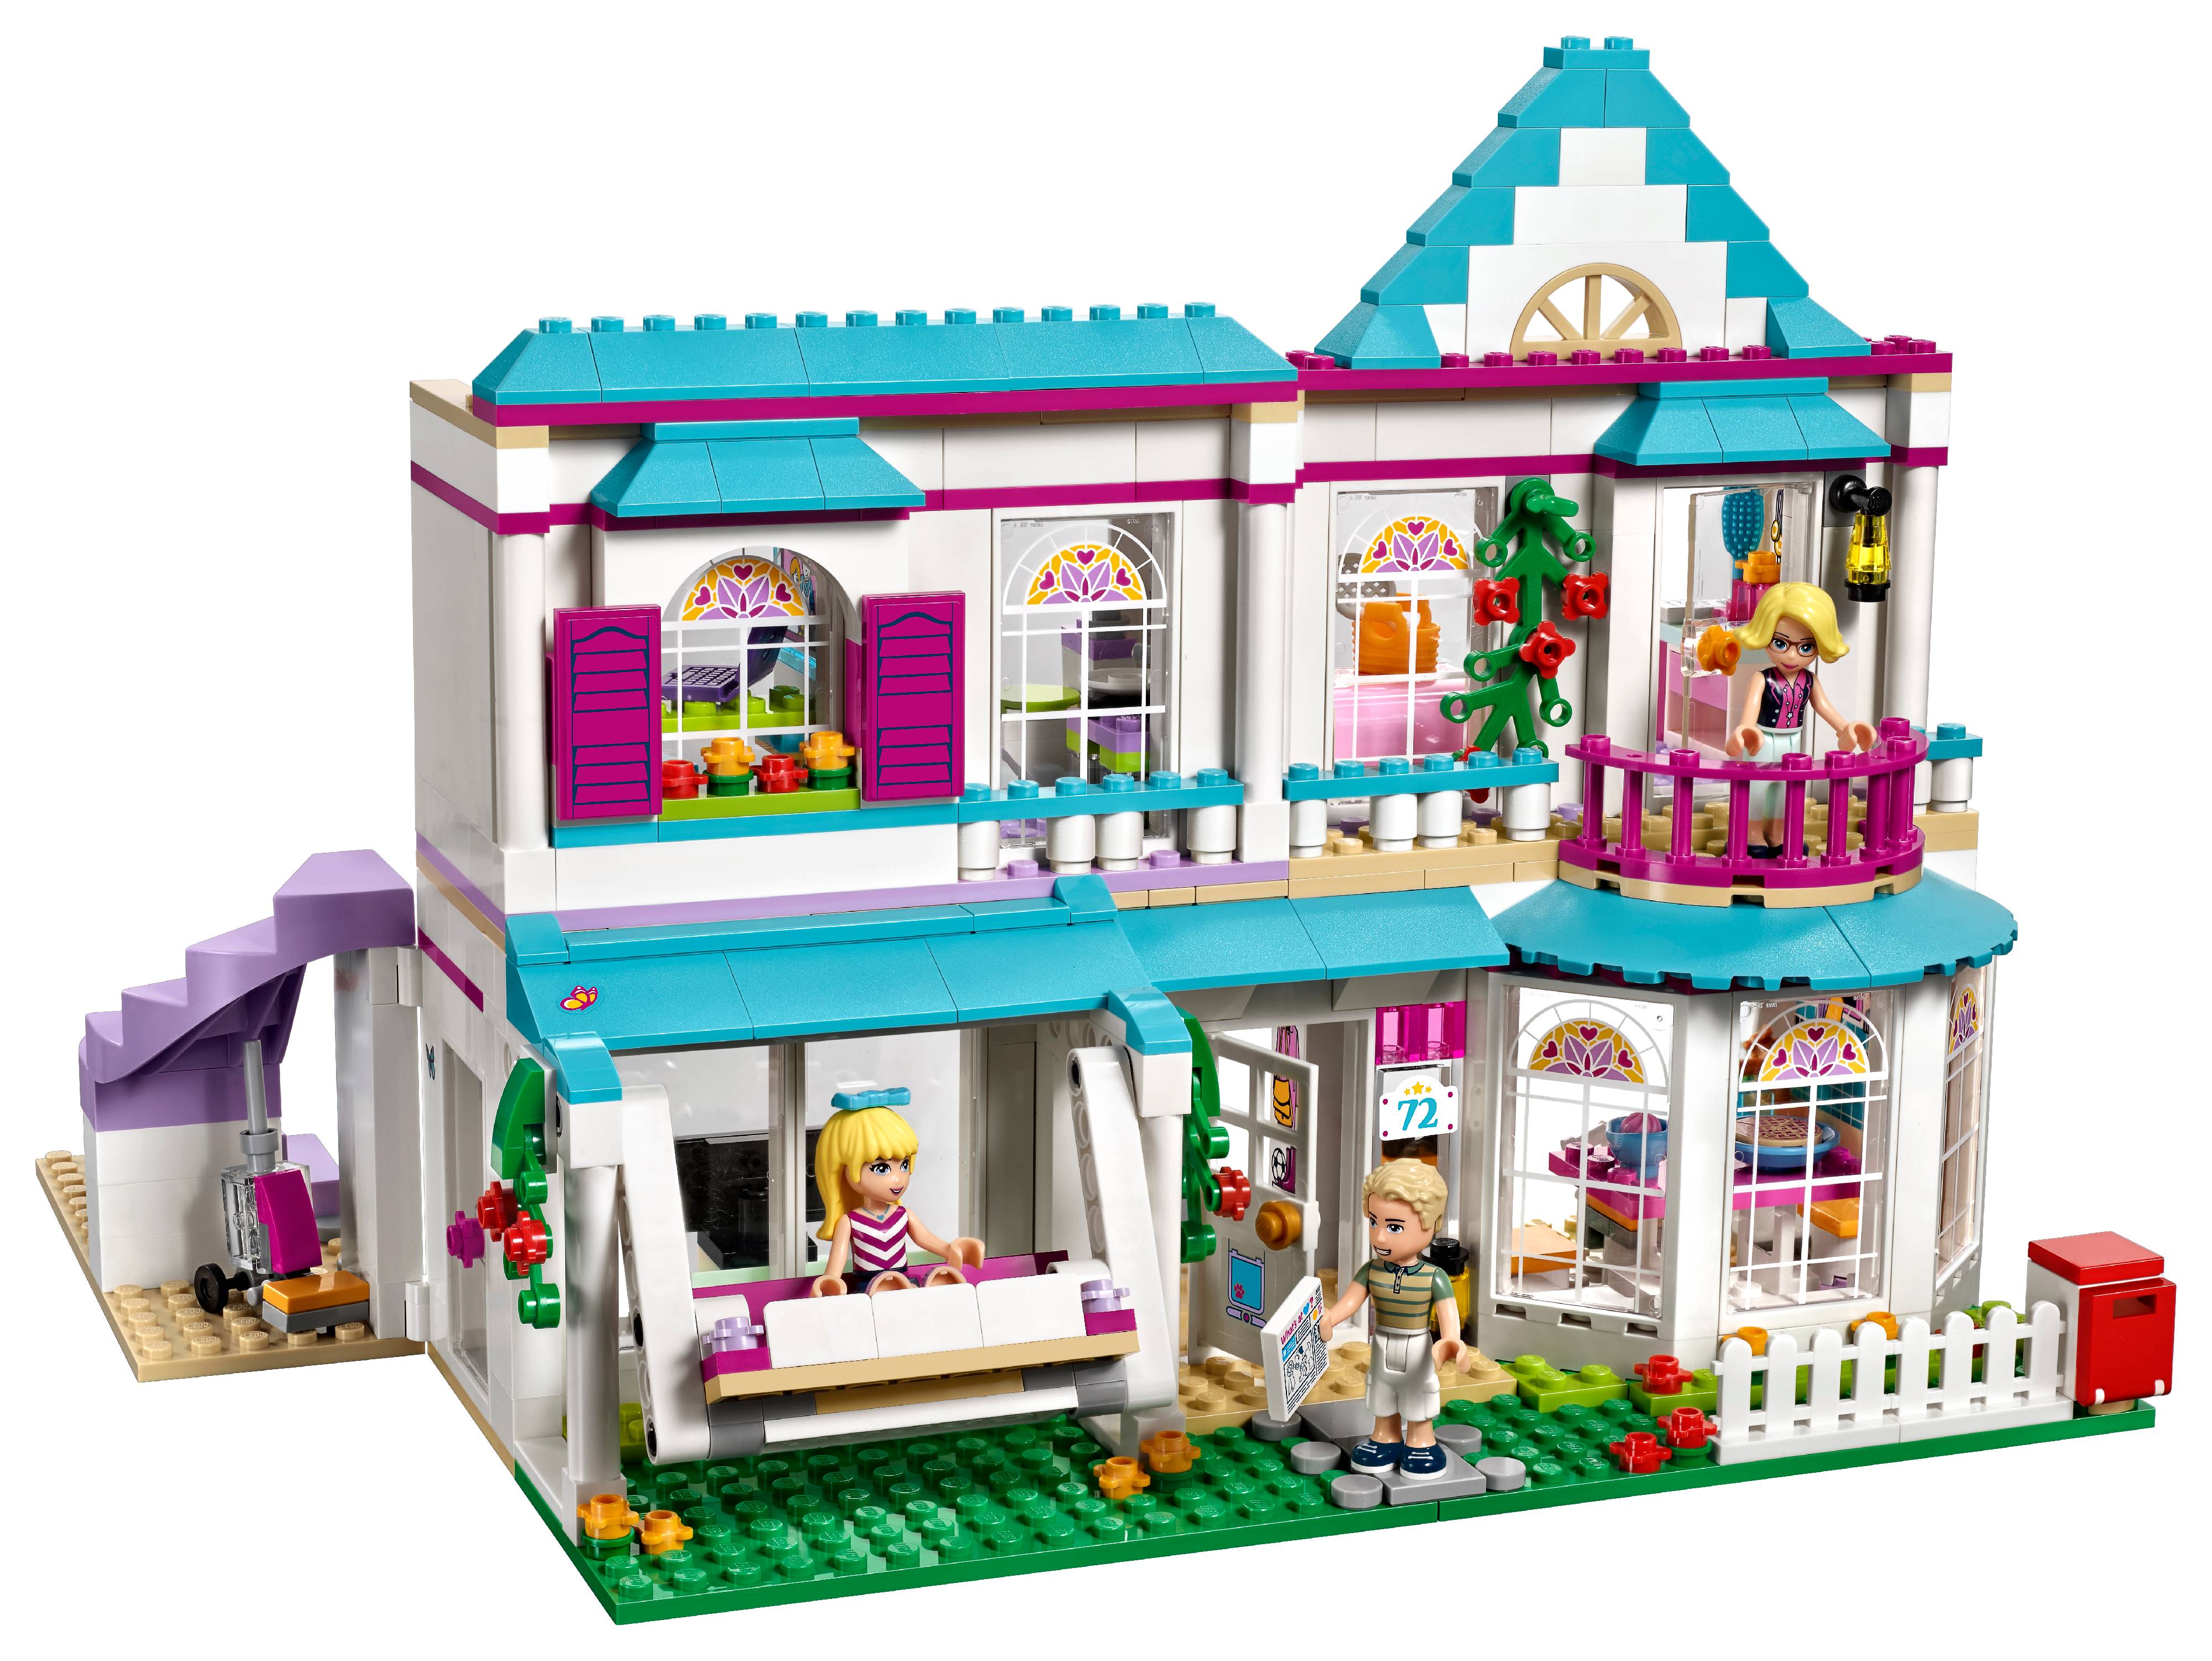 LEGO Friends Stephanie's House 41314 Toy Dollhouse Playset (622 pcs) - image 5 of 6